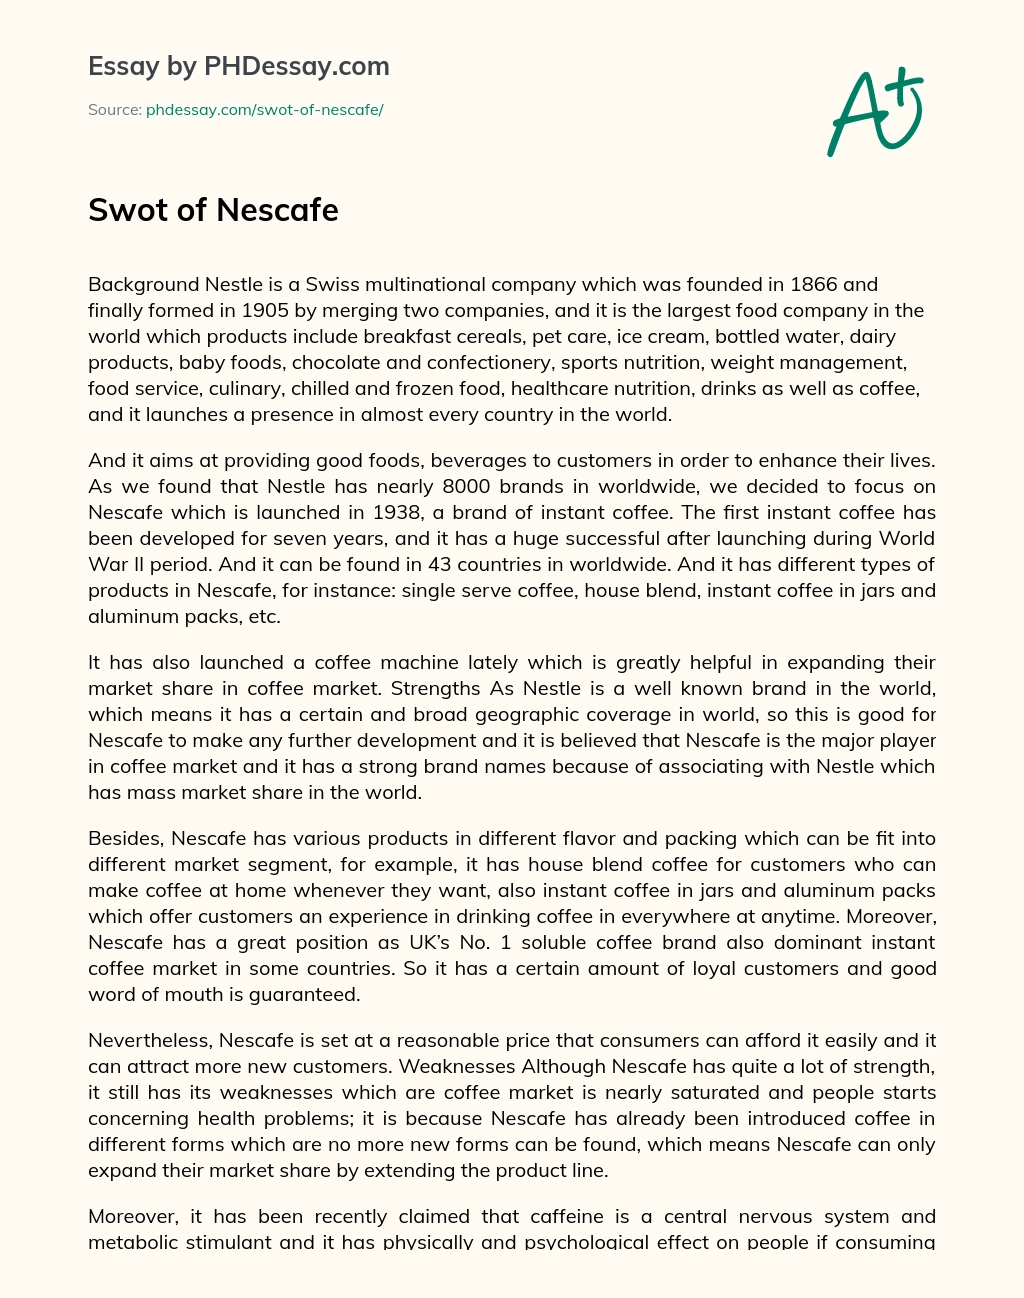 Swot of Nescafe essay